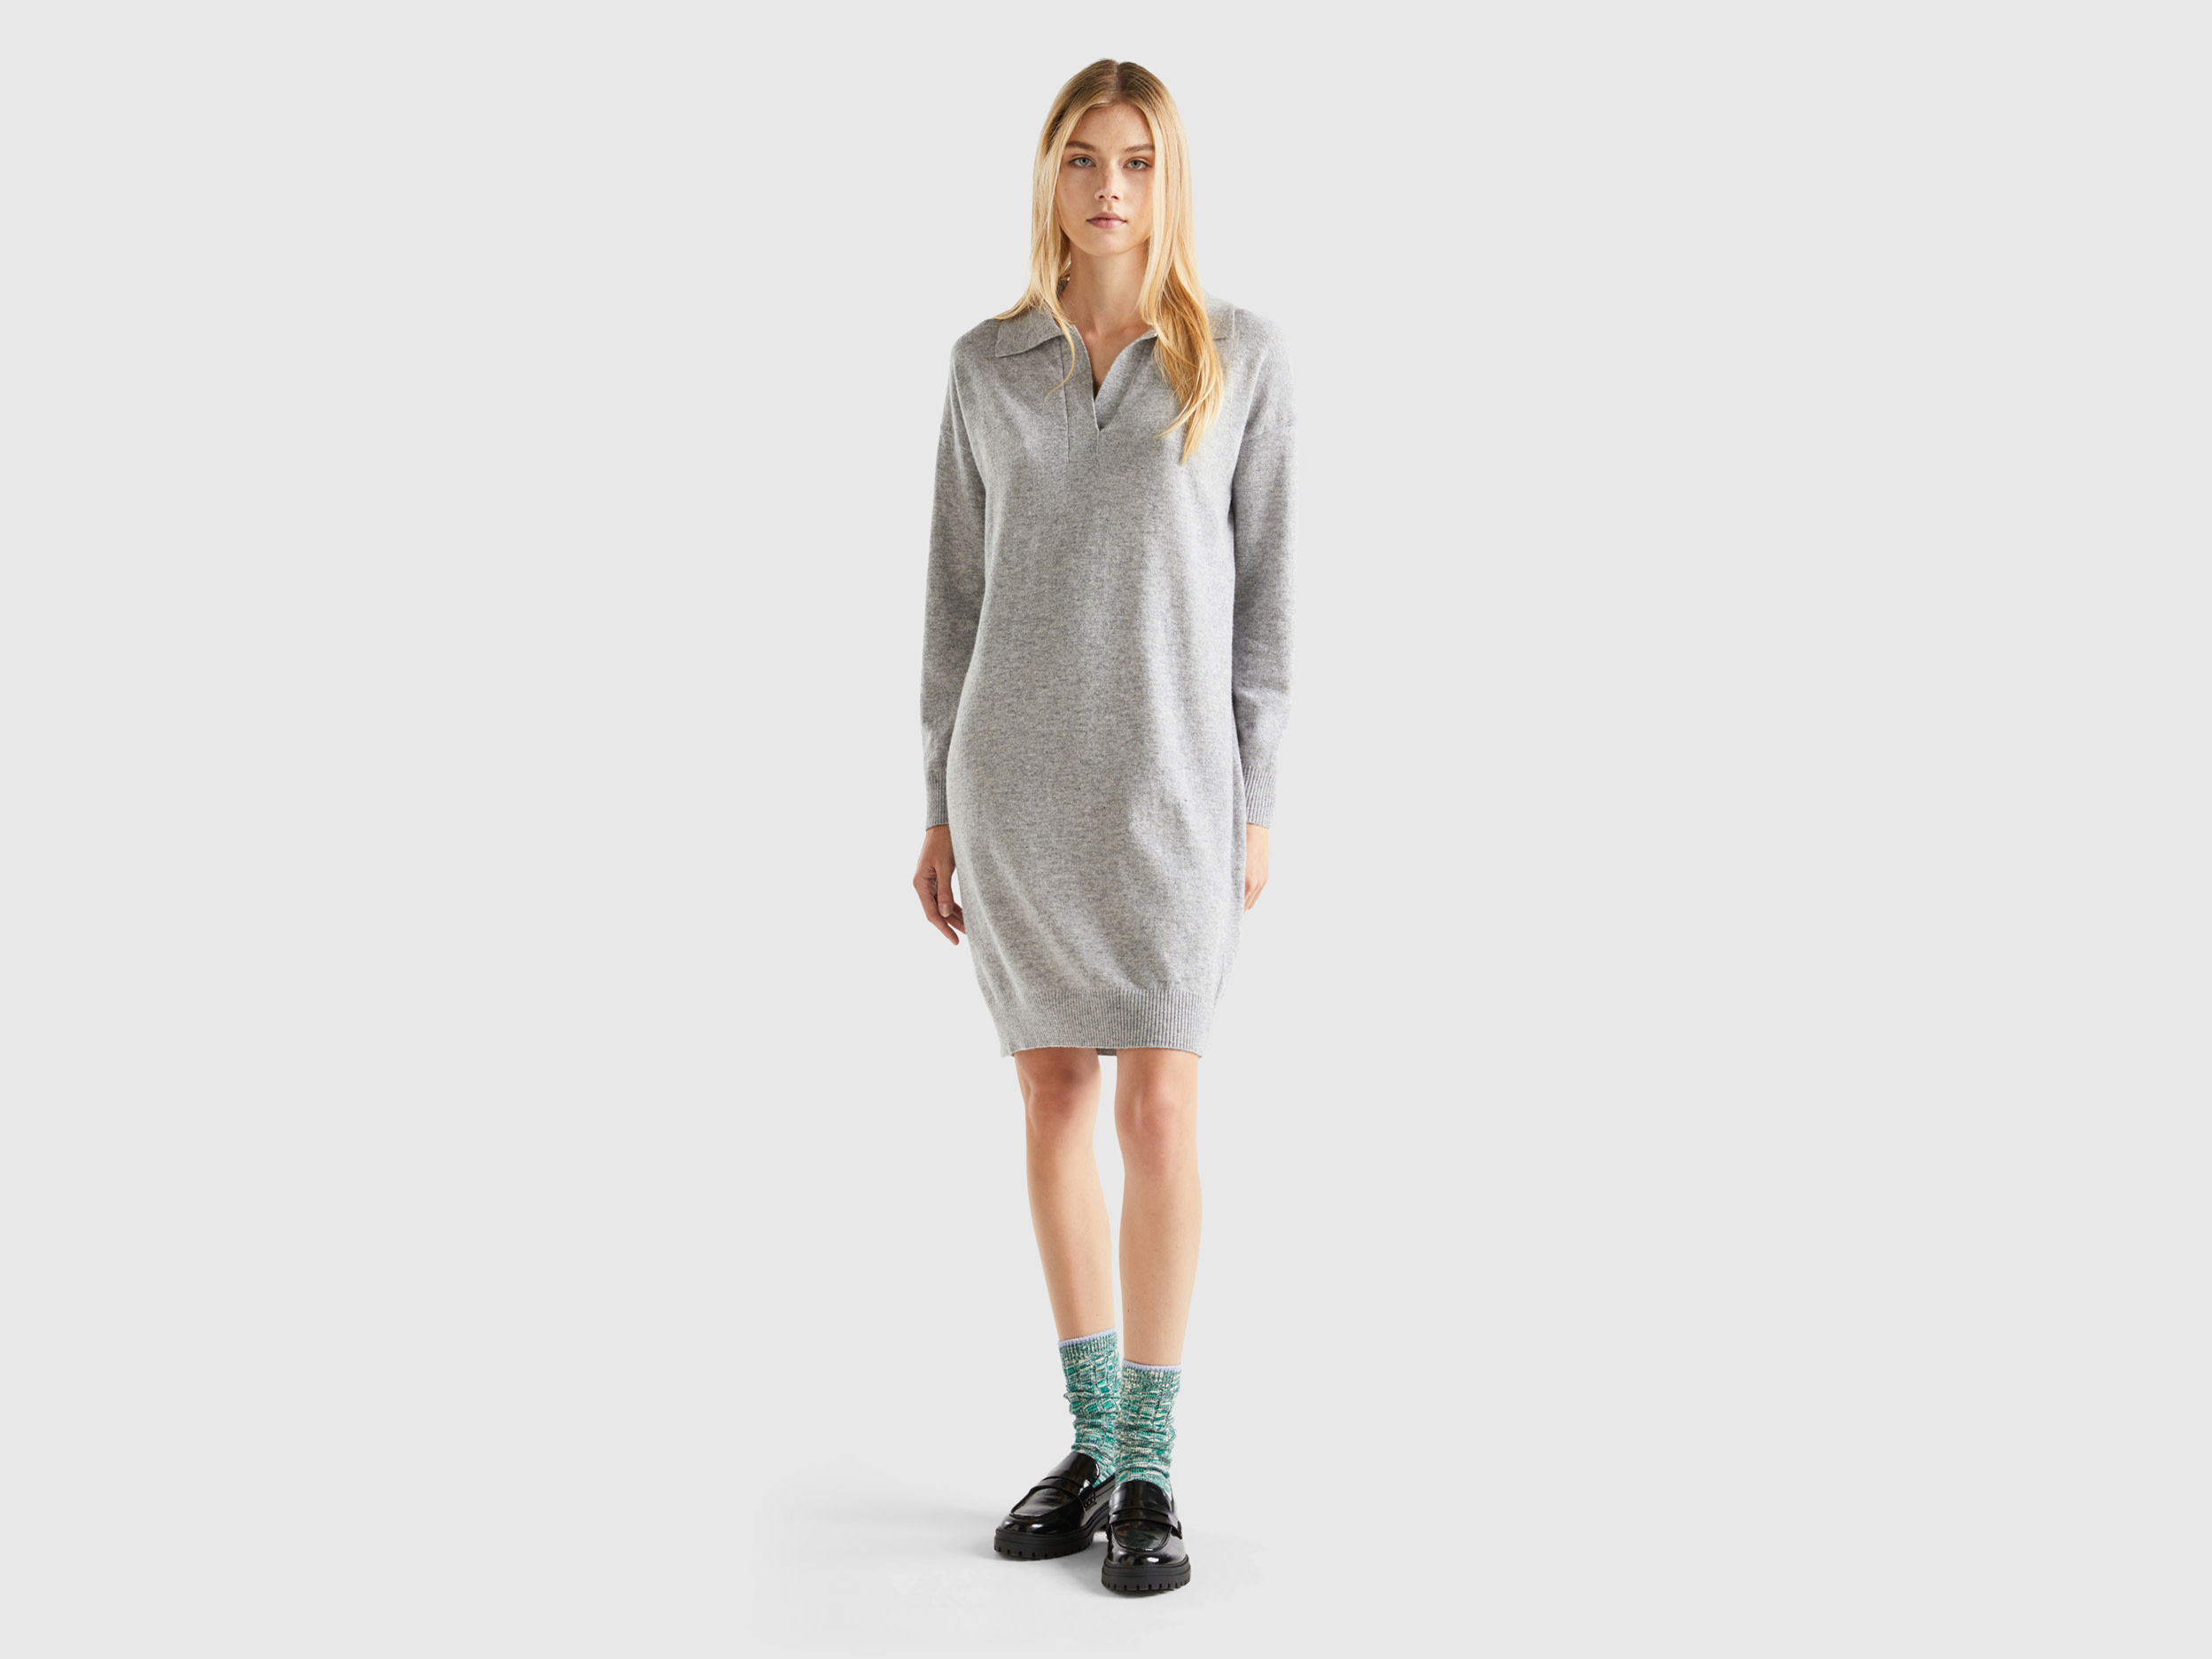 Benetton, Knit Dress With Collar, size L, Light Gray, Women